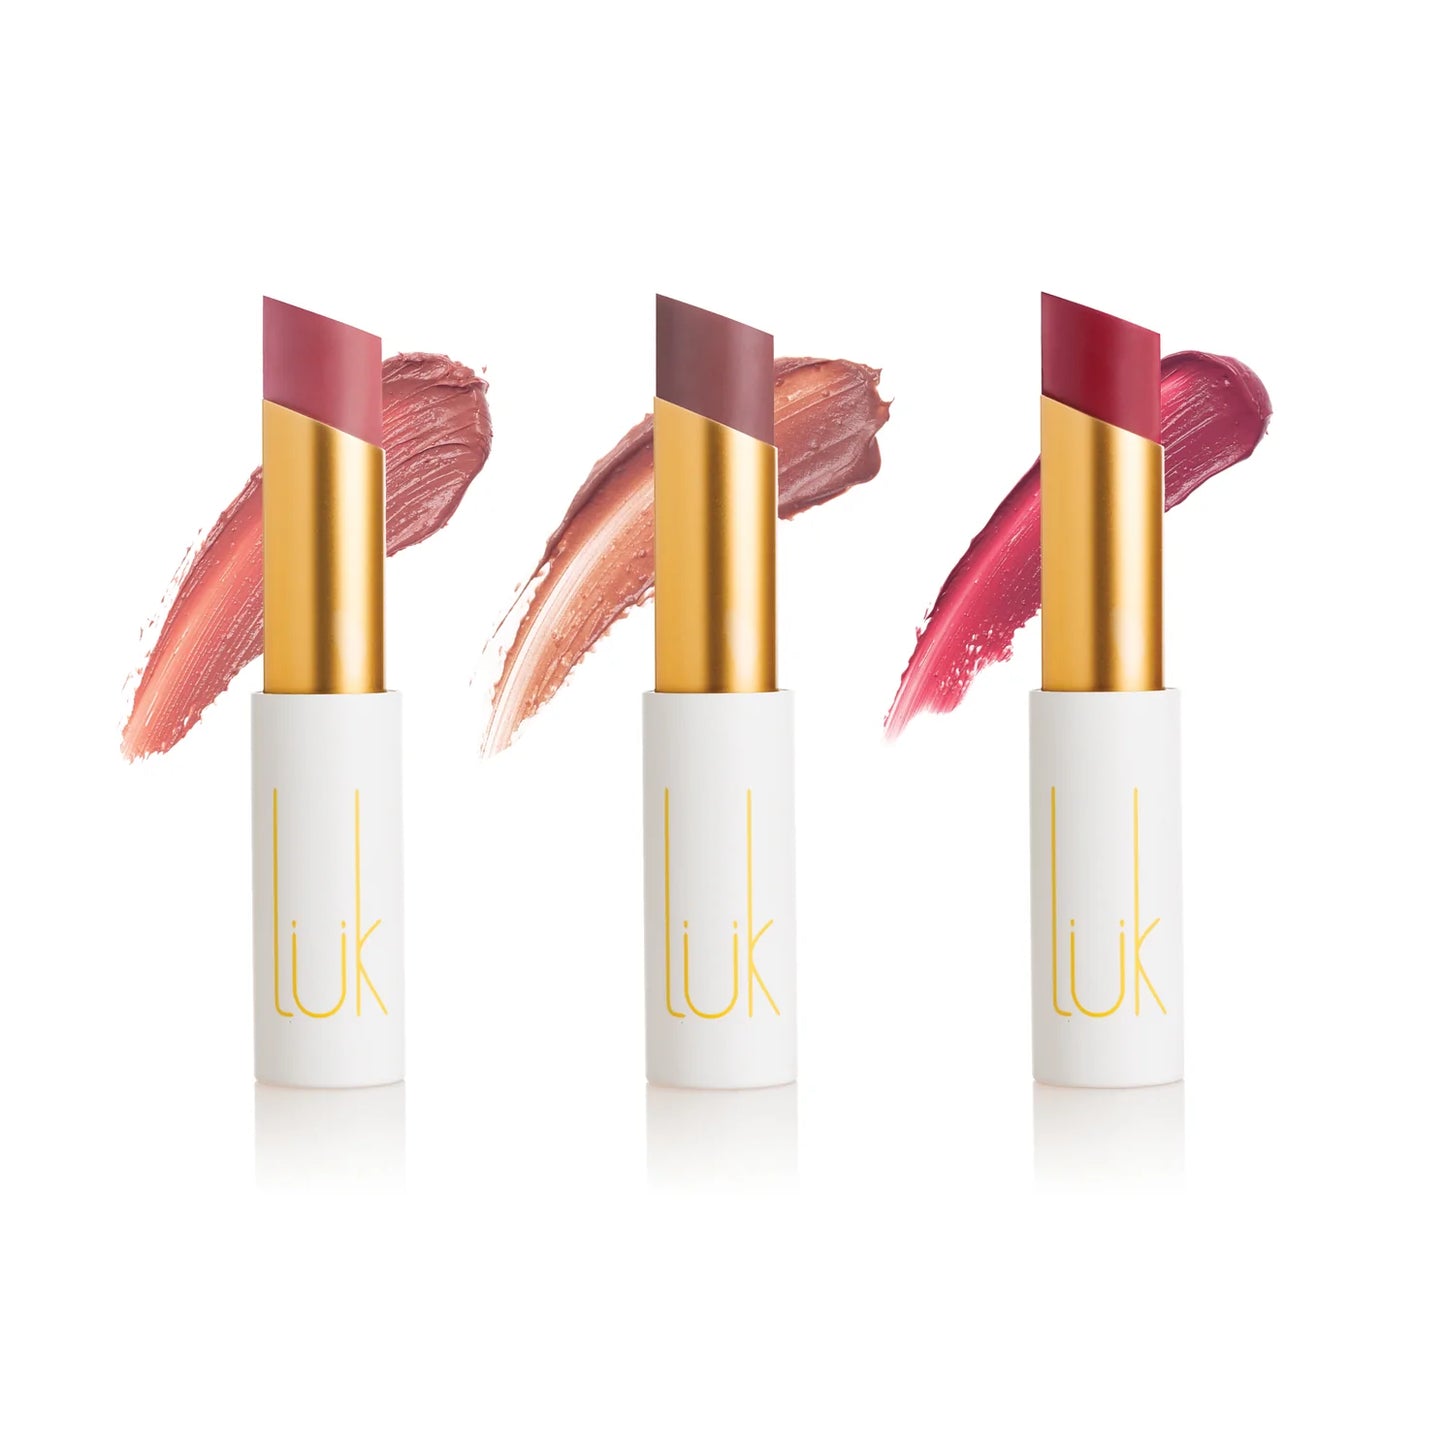 Lipstick Trio Pack - Best in Luk Lips